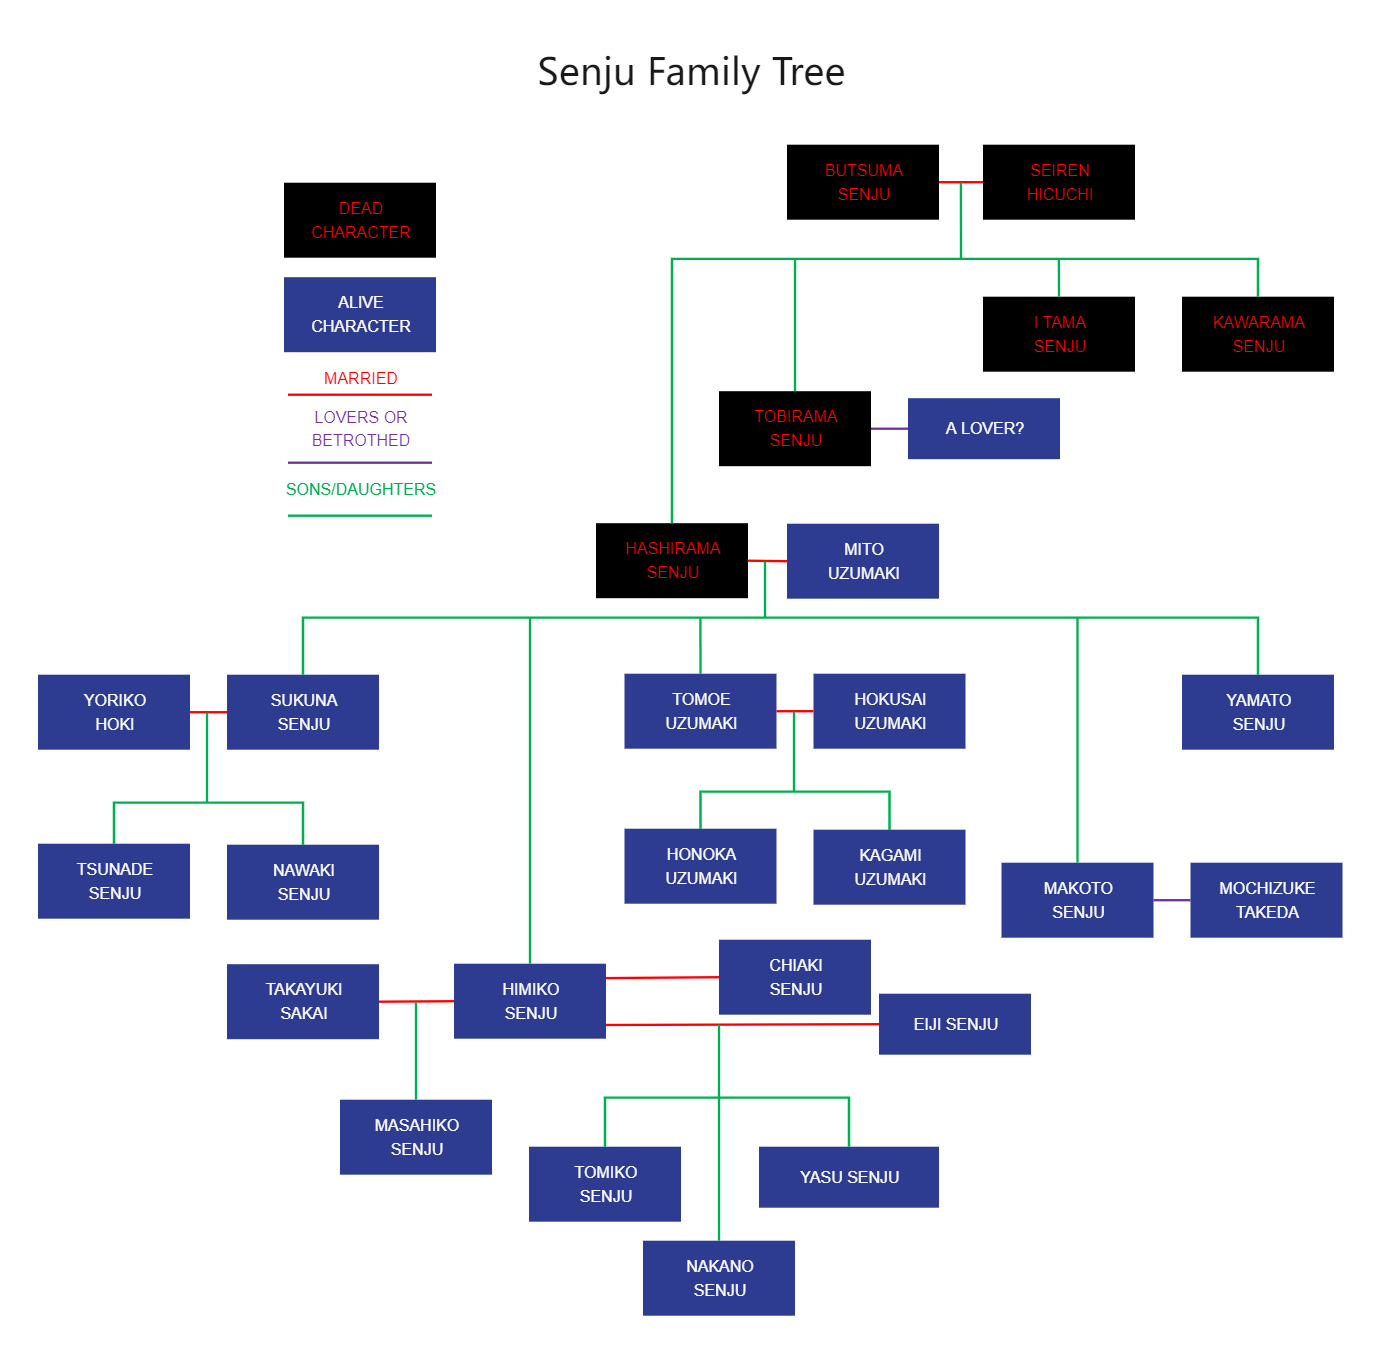 Senju Family Tree